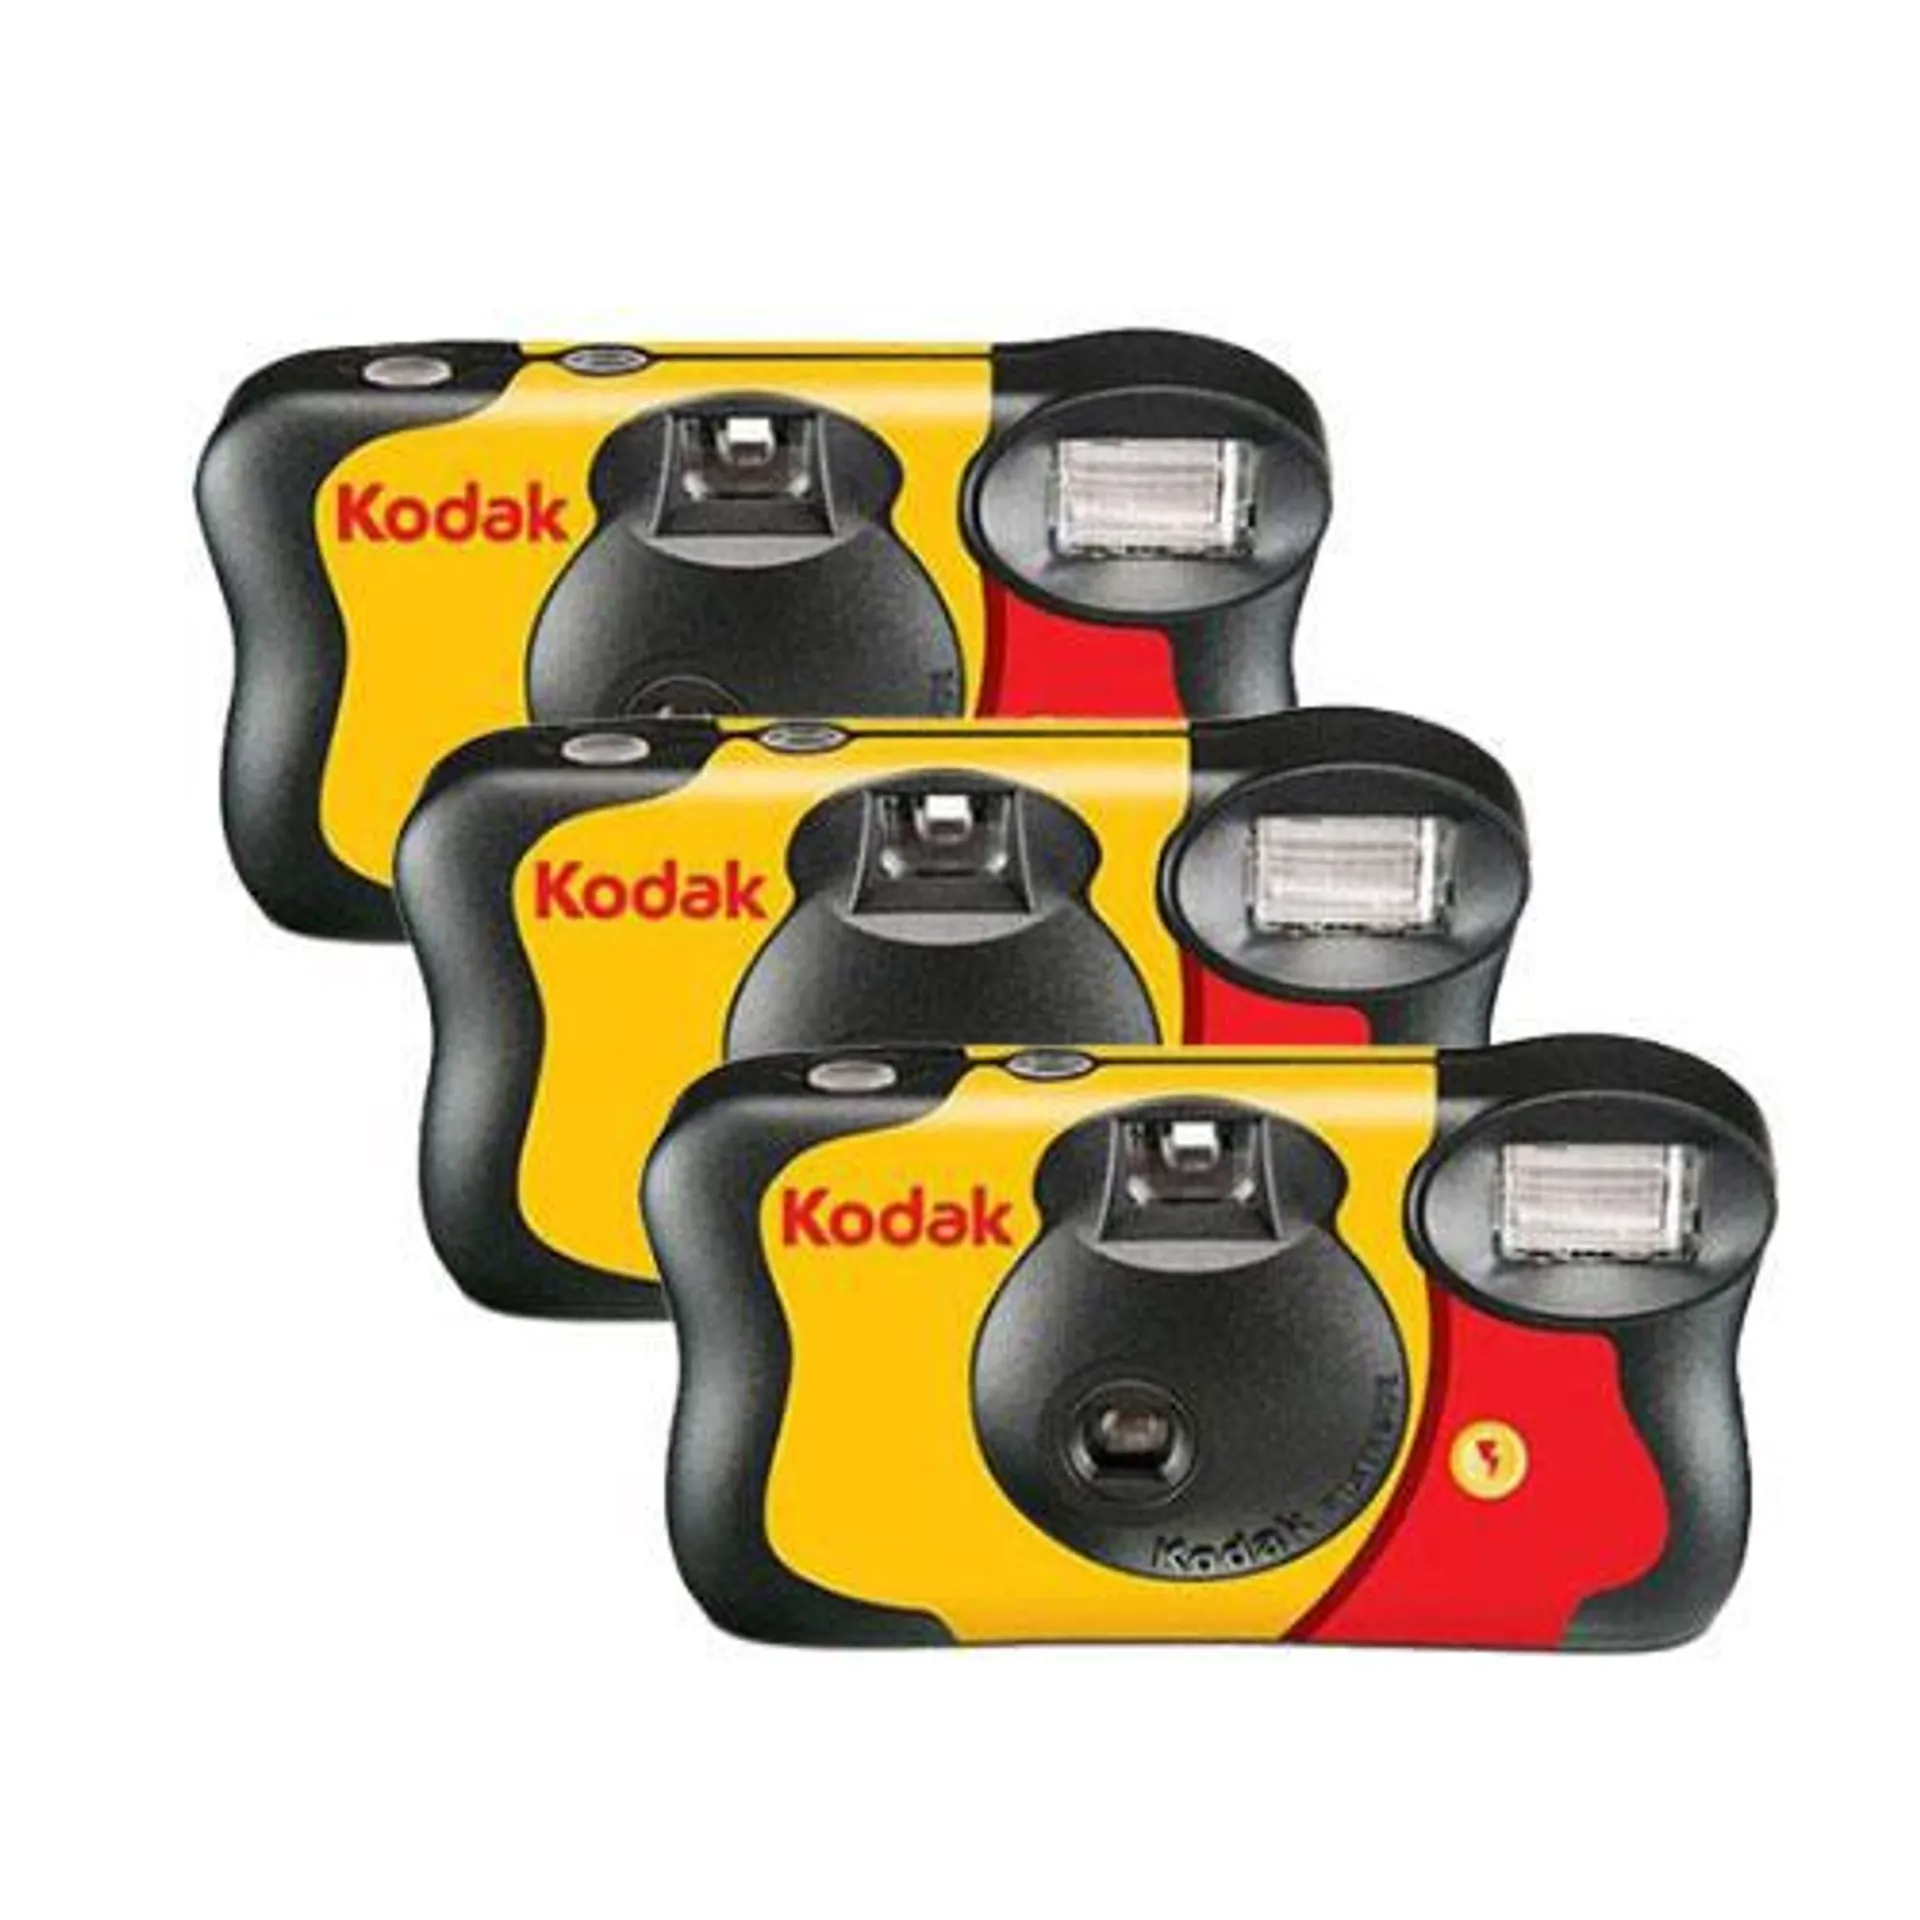 Kodak FunSaver 35mm Single Use Camera with 27+12 Exposures Pack of 3